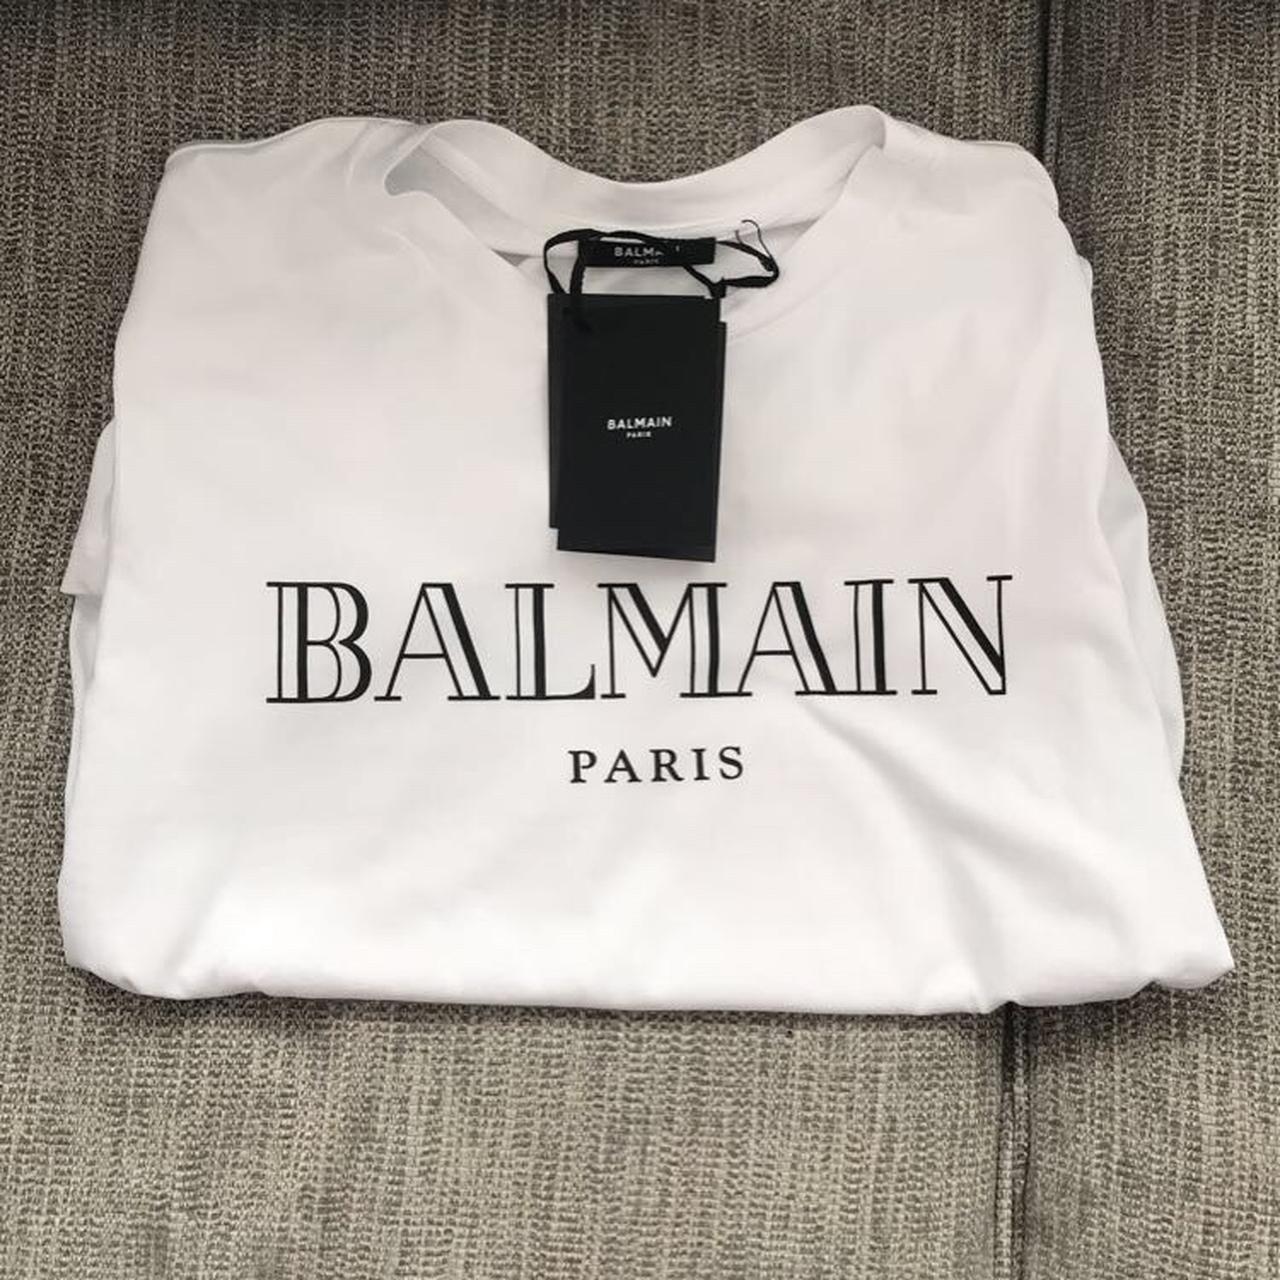 Balmain Authentic brand new white t shirt SIZE SMALL... - Depop